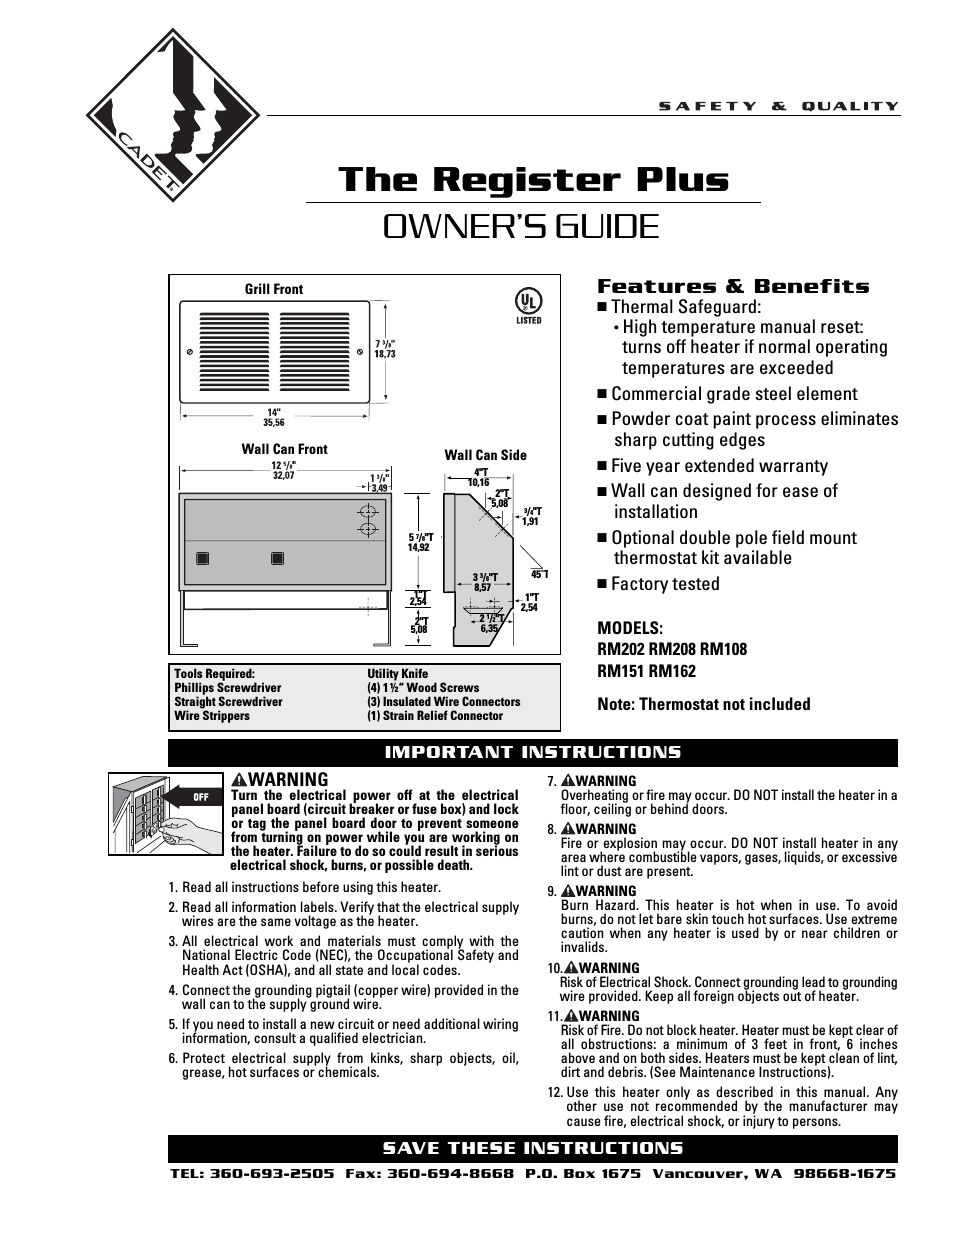 The Register Plus RM202